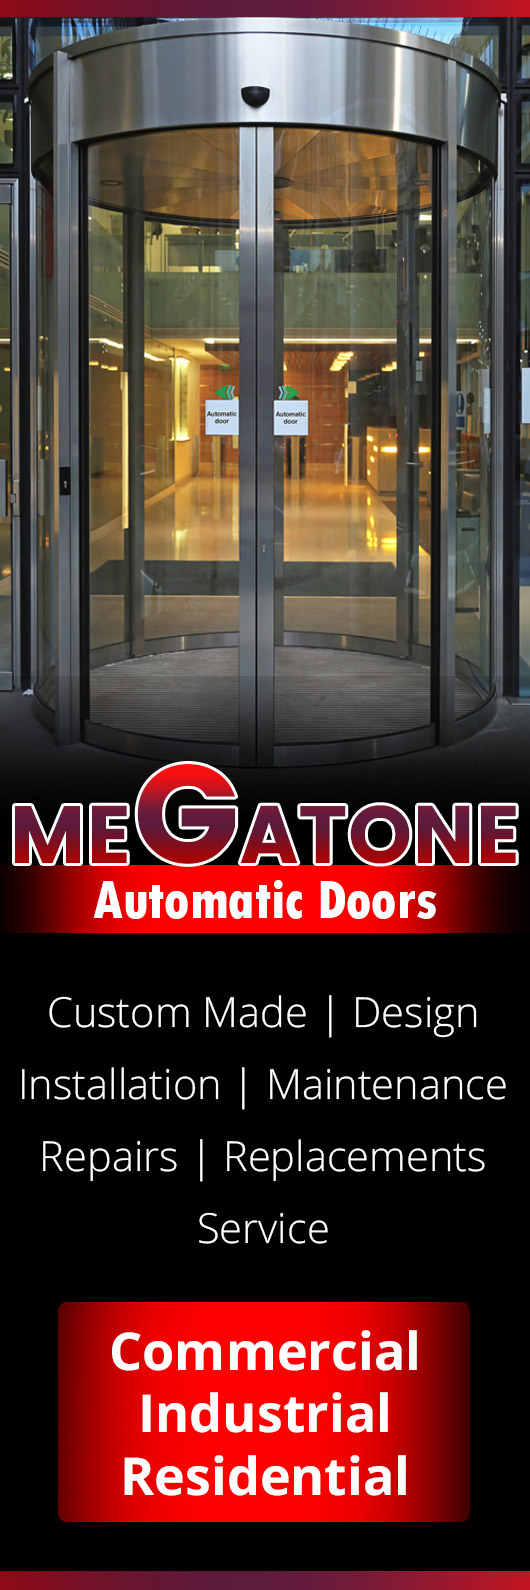 Megatone Automatic Doors Door Gate Operating Equipment Albury pertaining to size 530 X 1590